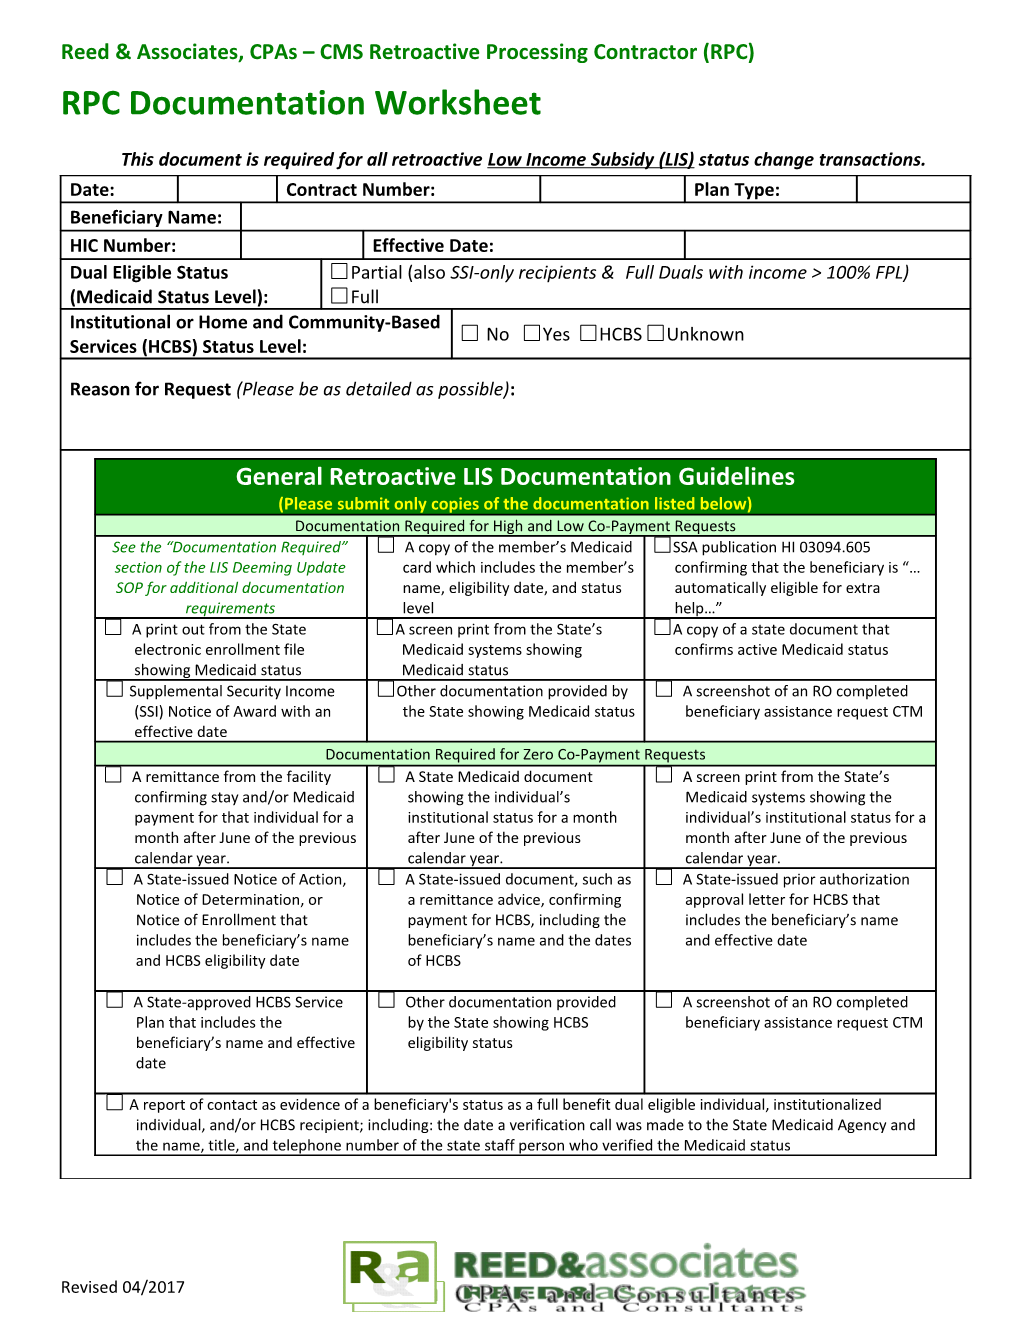 RPC Documentation Worksheet